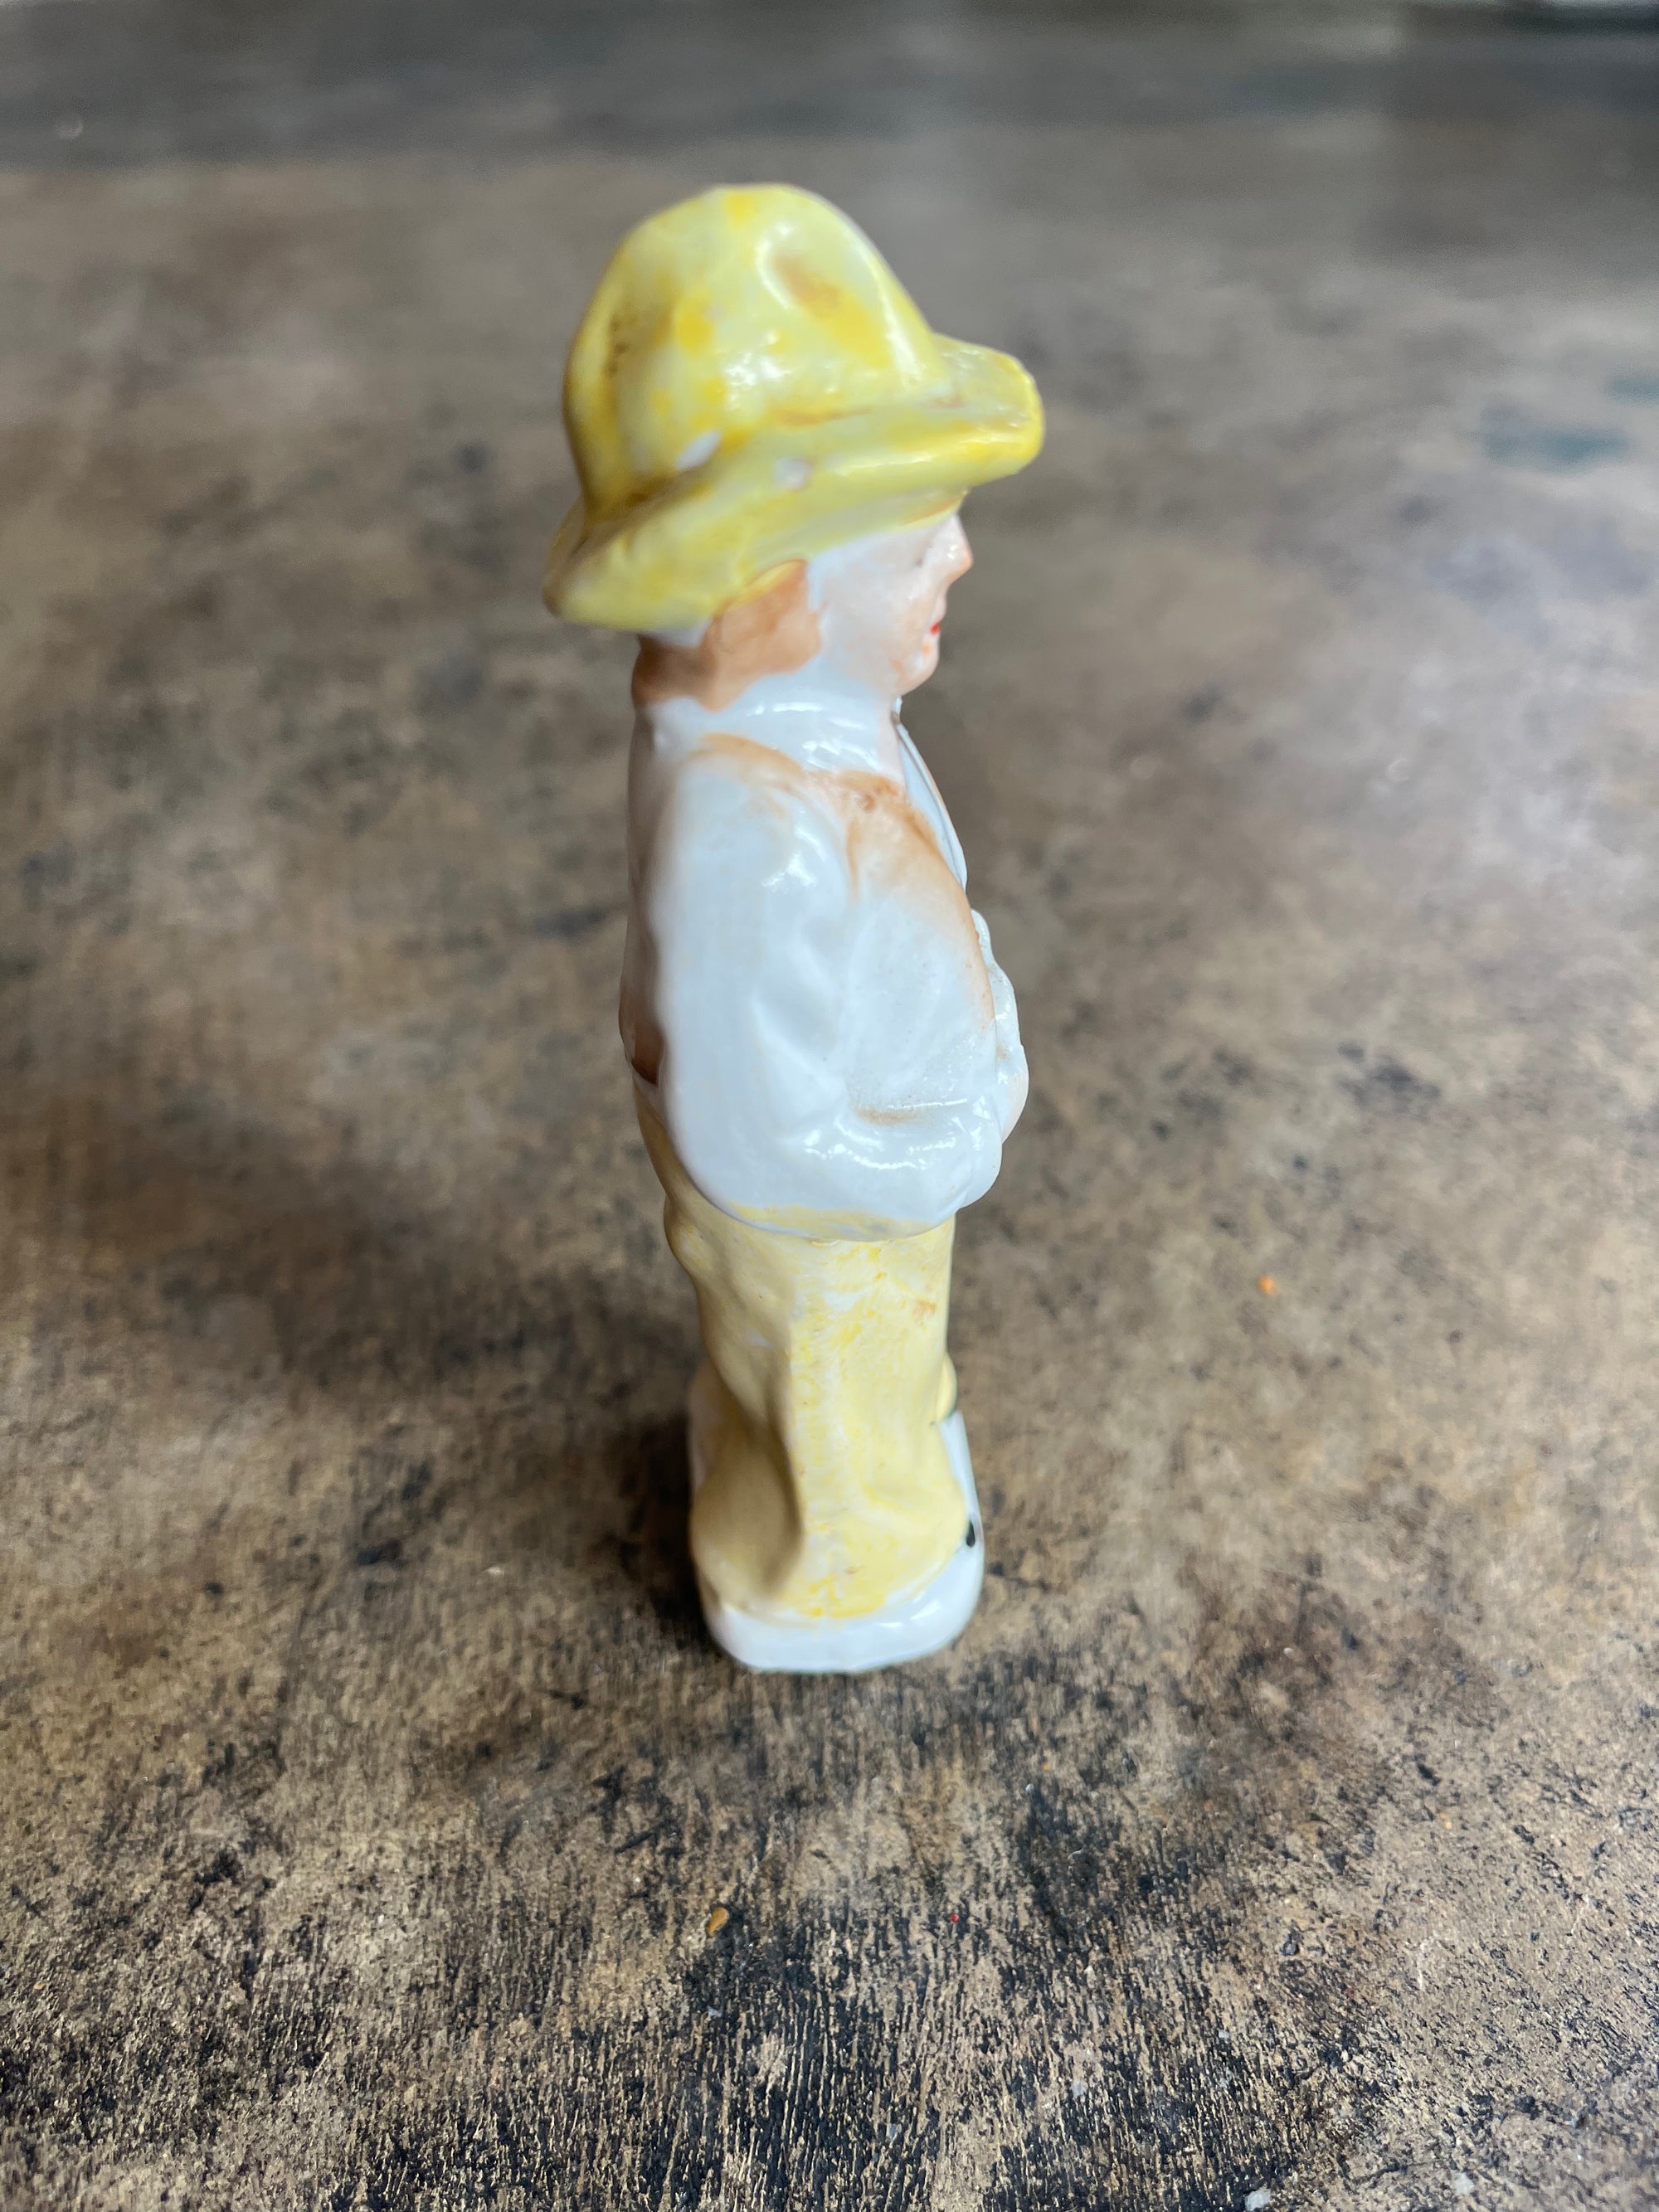 Small Tan Cowboy Figurine